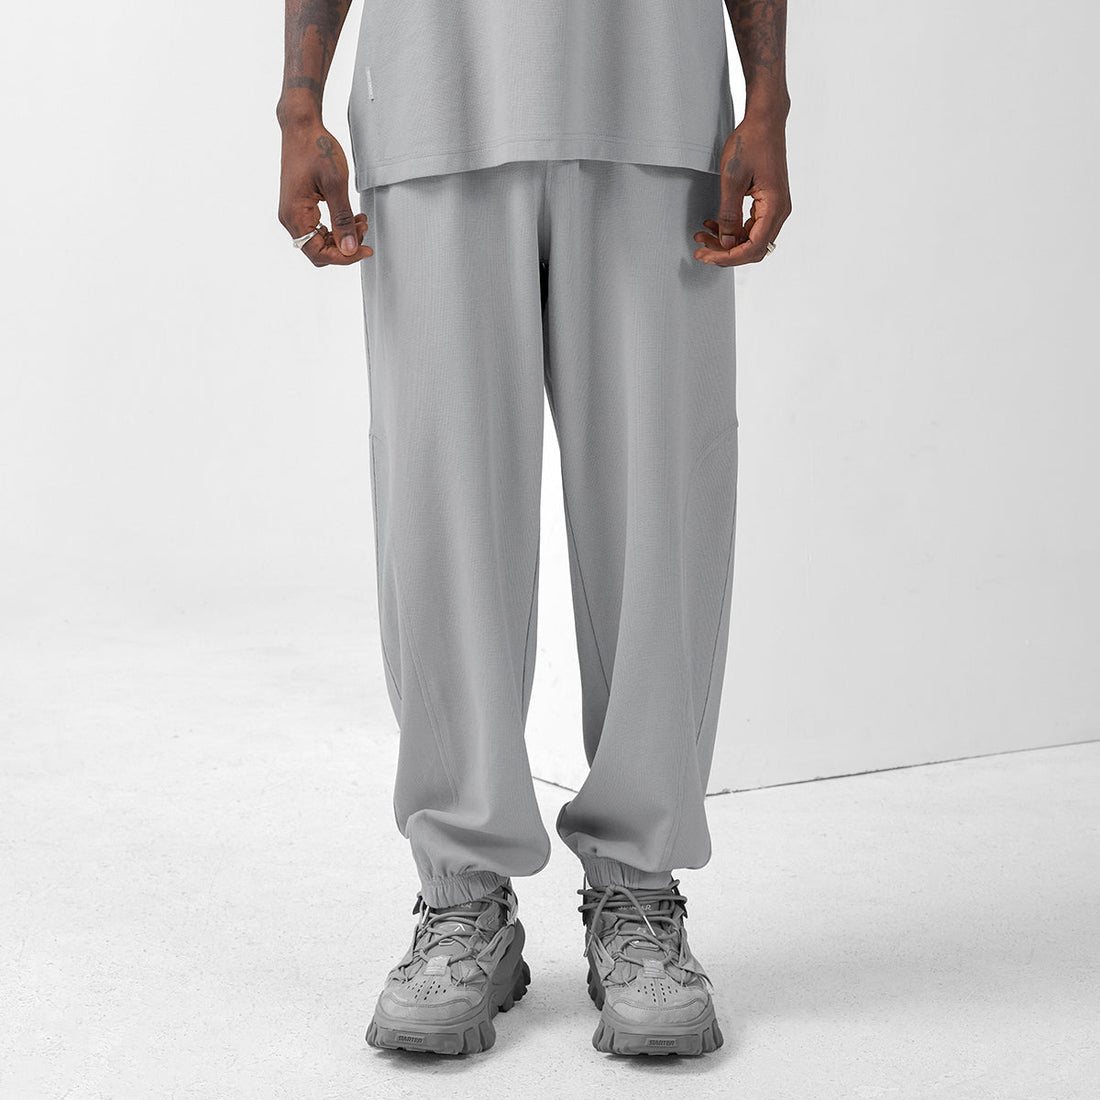 City Runner Plain Grey Sweatpants - 0cm